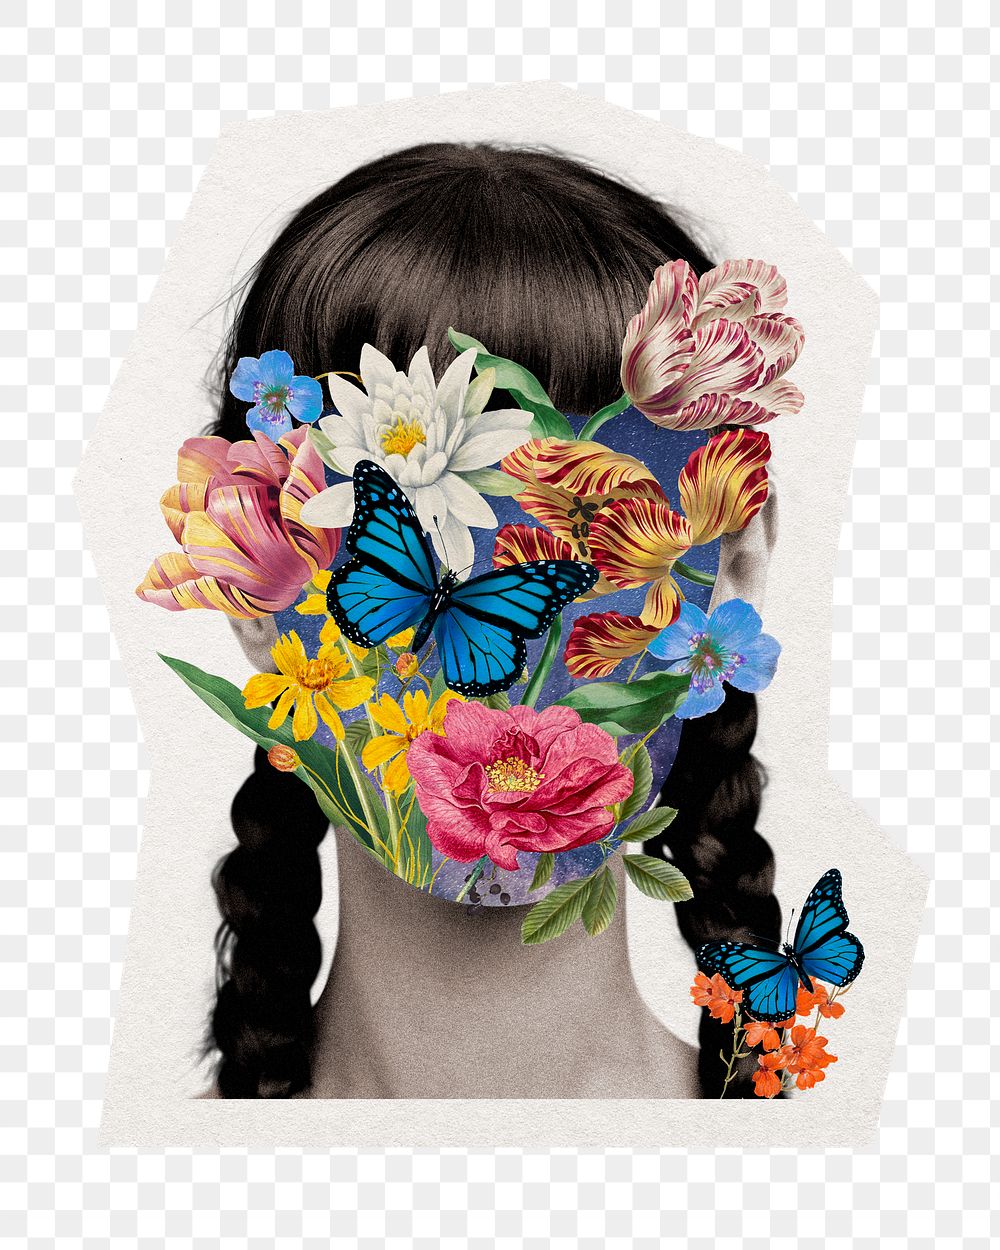 PNG sticker floral woman, botanical illustration mixed media, digital collage art in transparent background